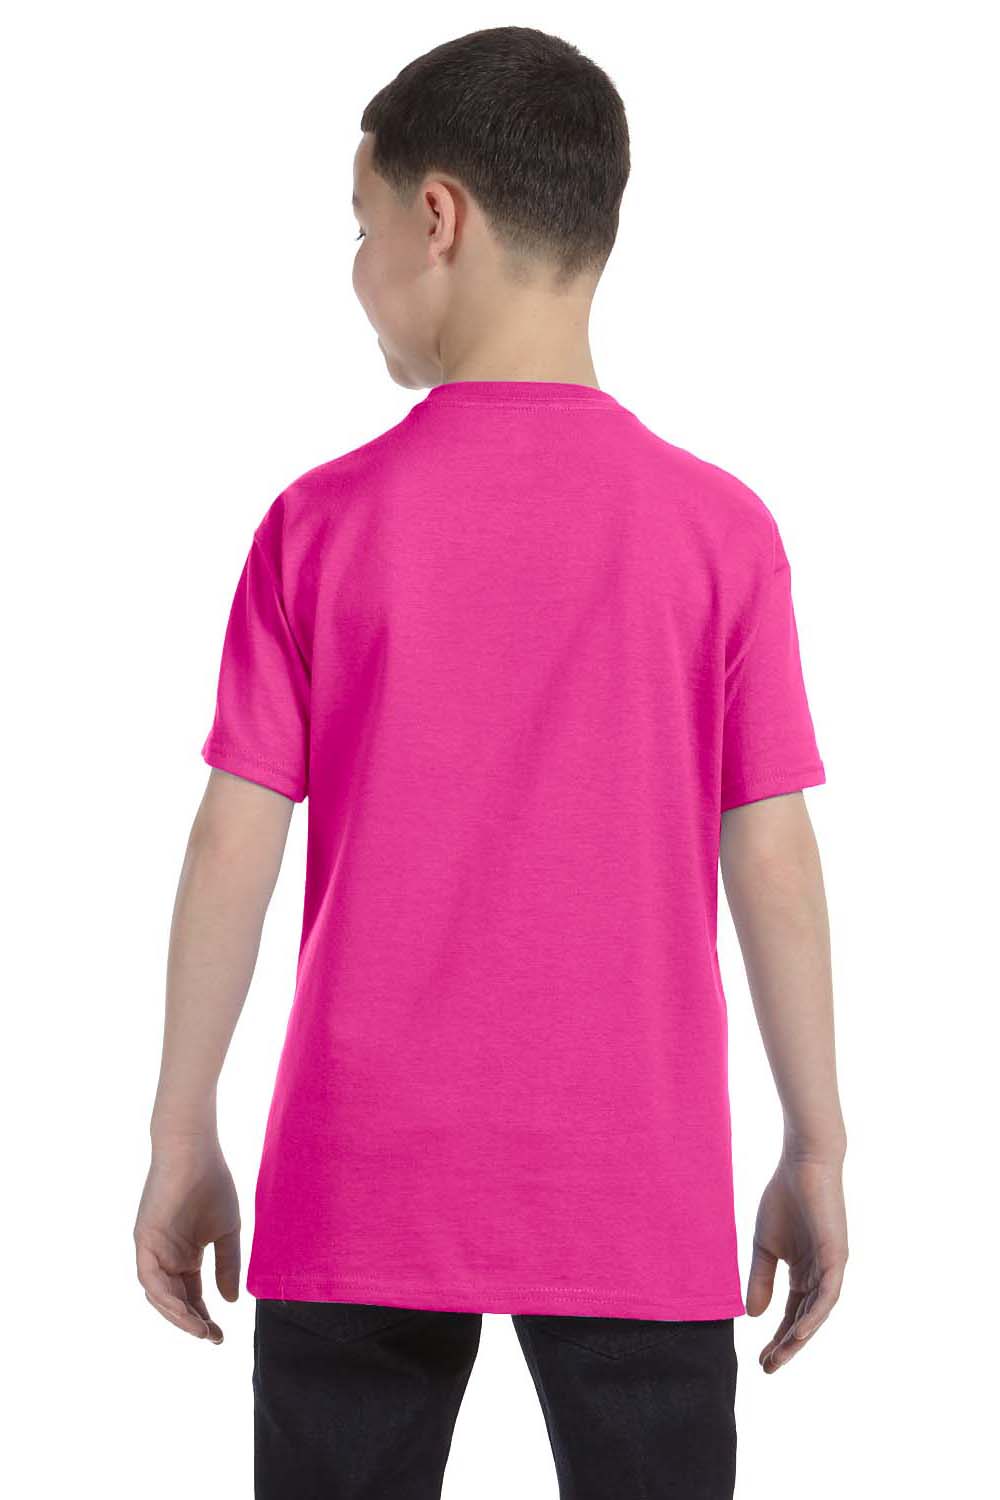 Jerzees 29B Youth Dri-Power Moisture Wicking Short Sleeve Crewneck T-Shirt Cyber Pink Back